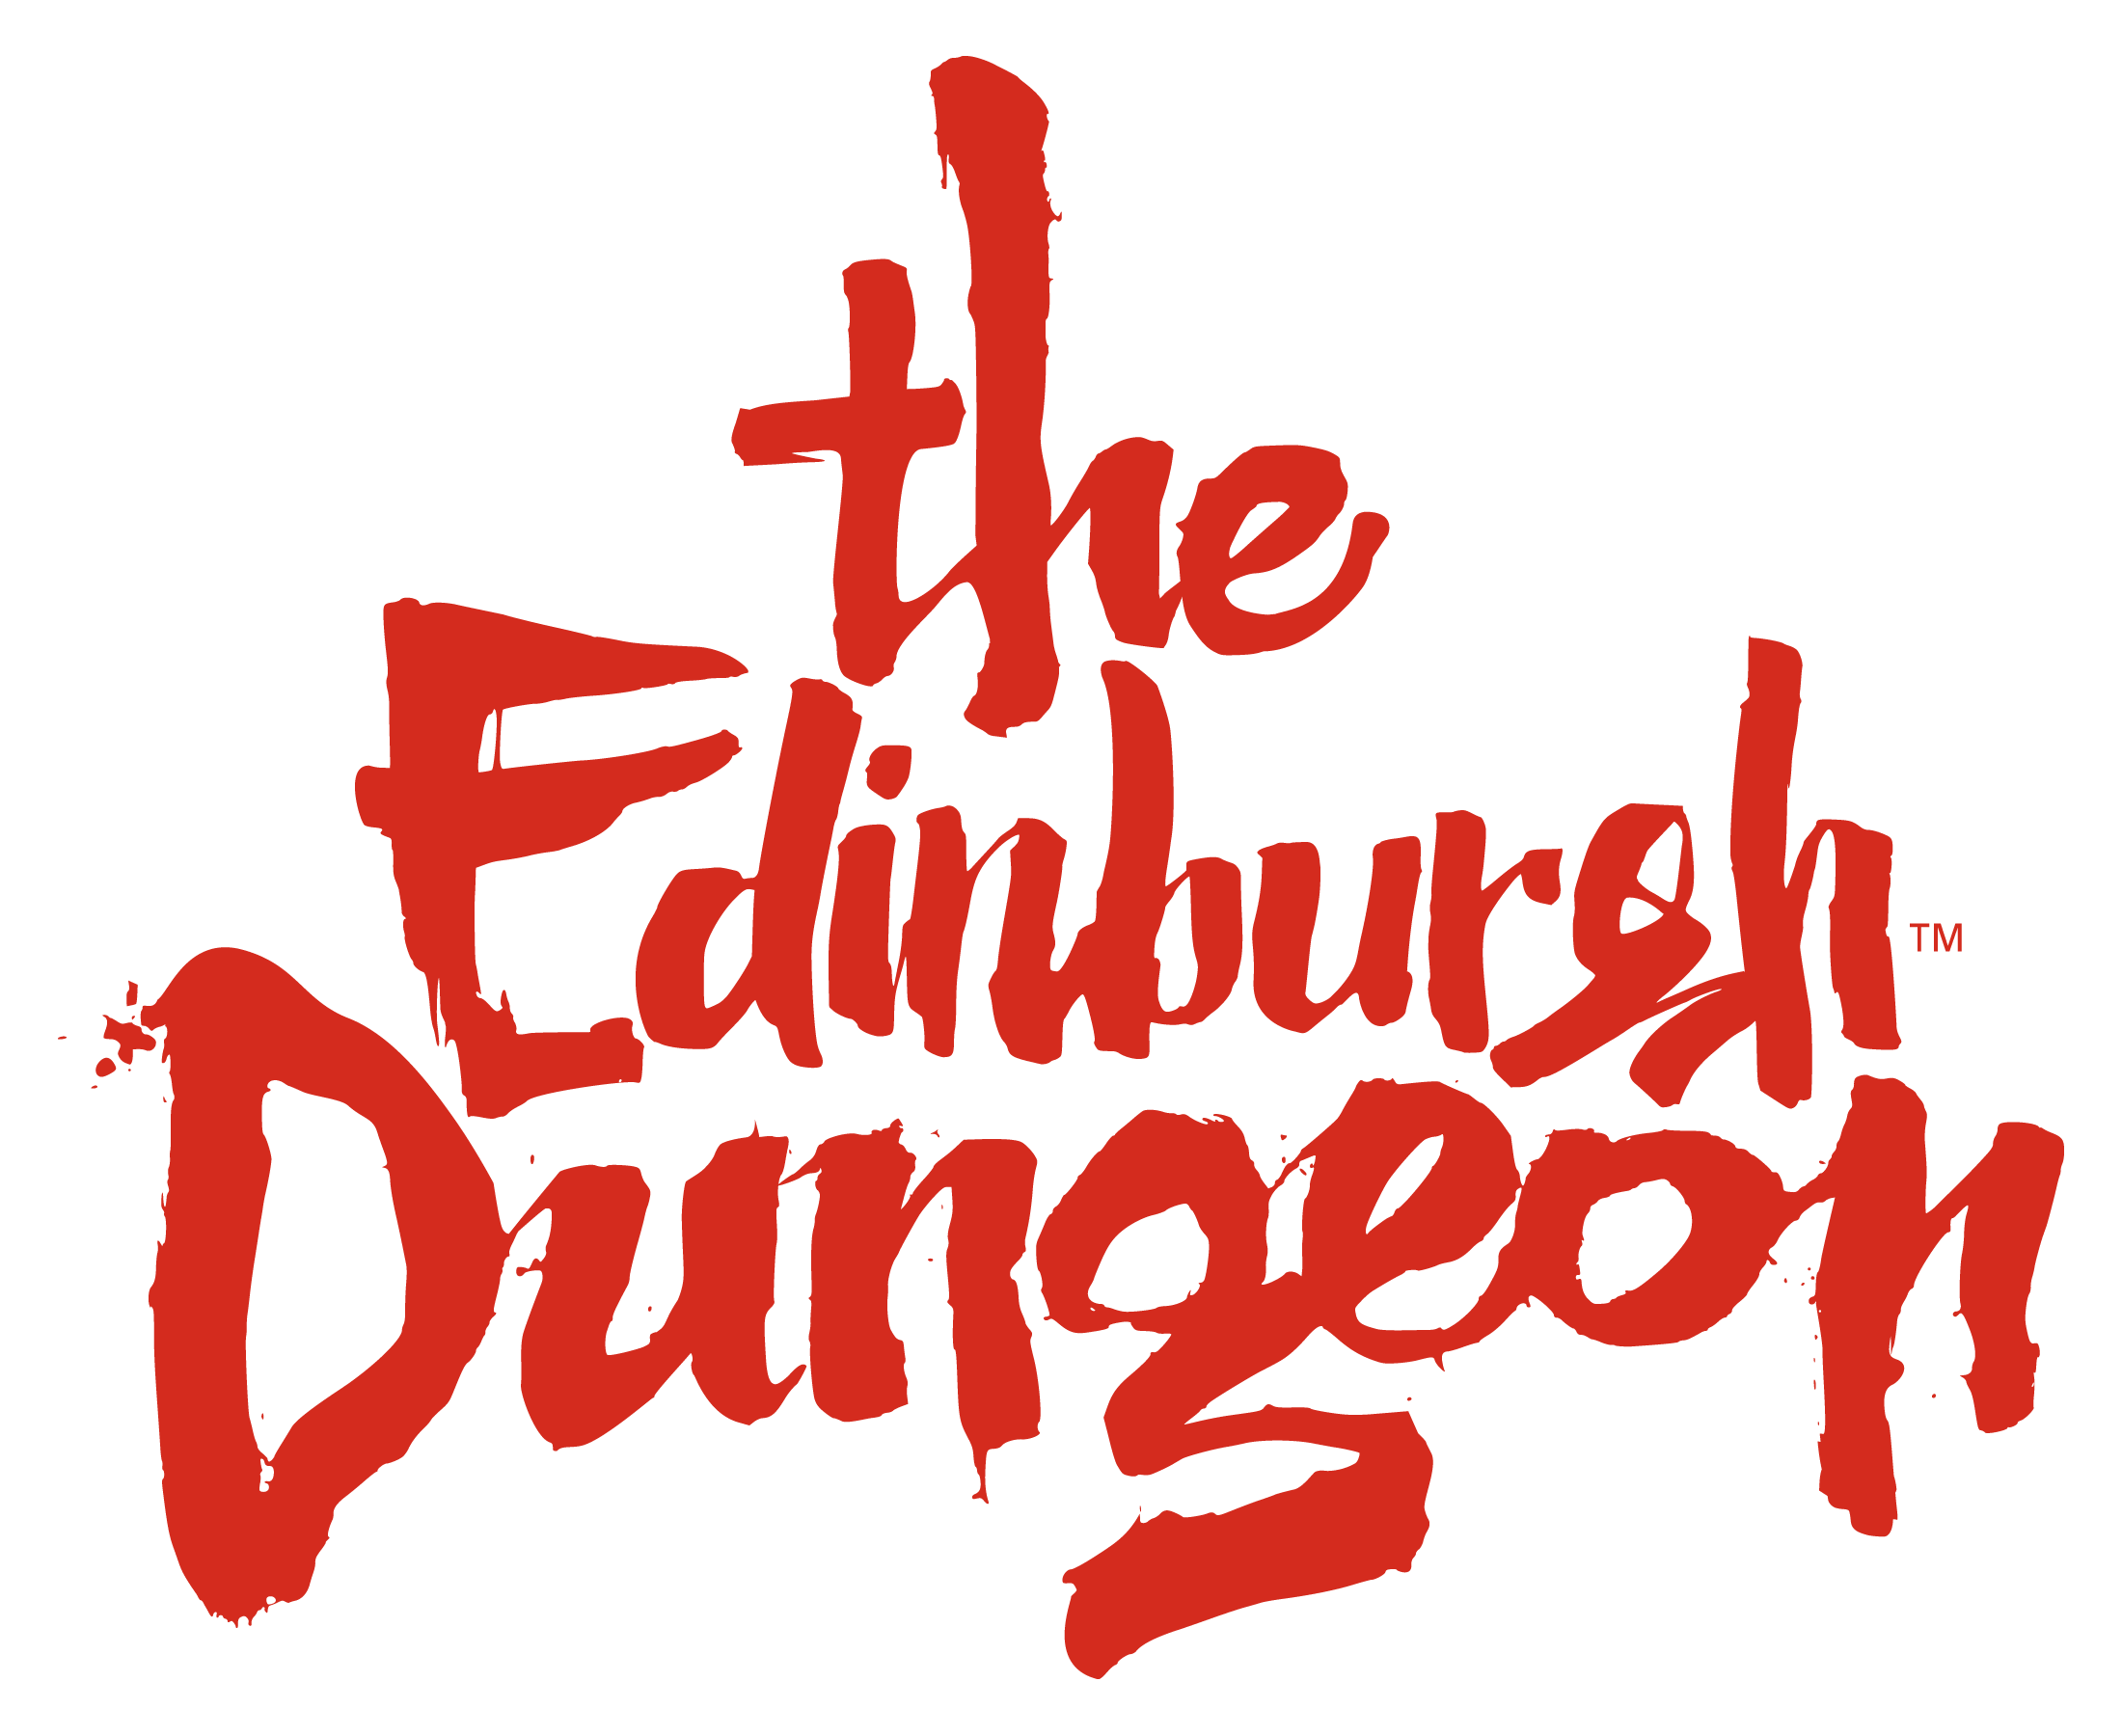 The Edinburgh Dungeon logo